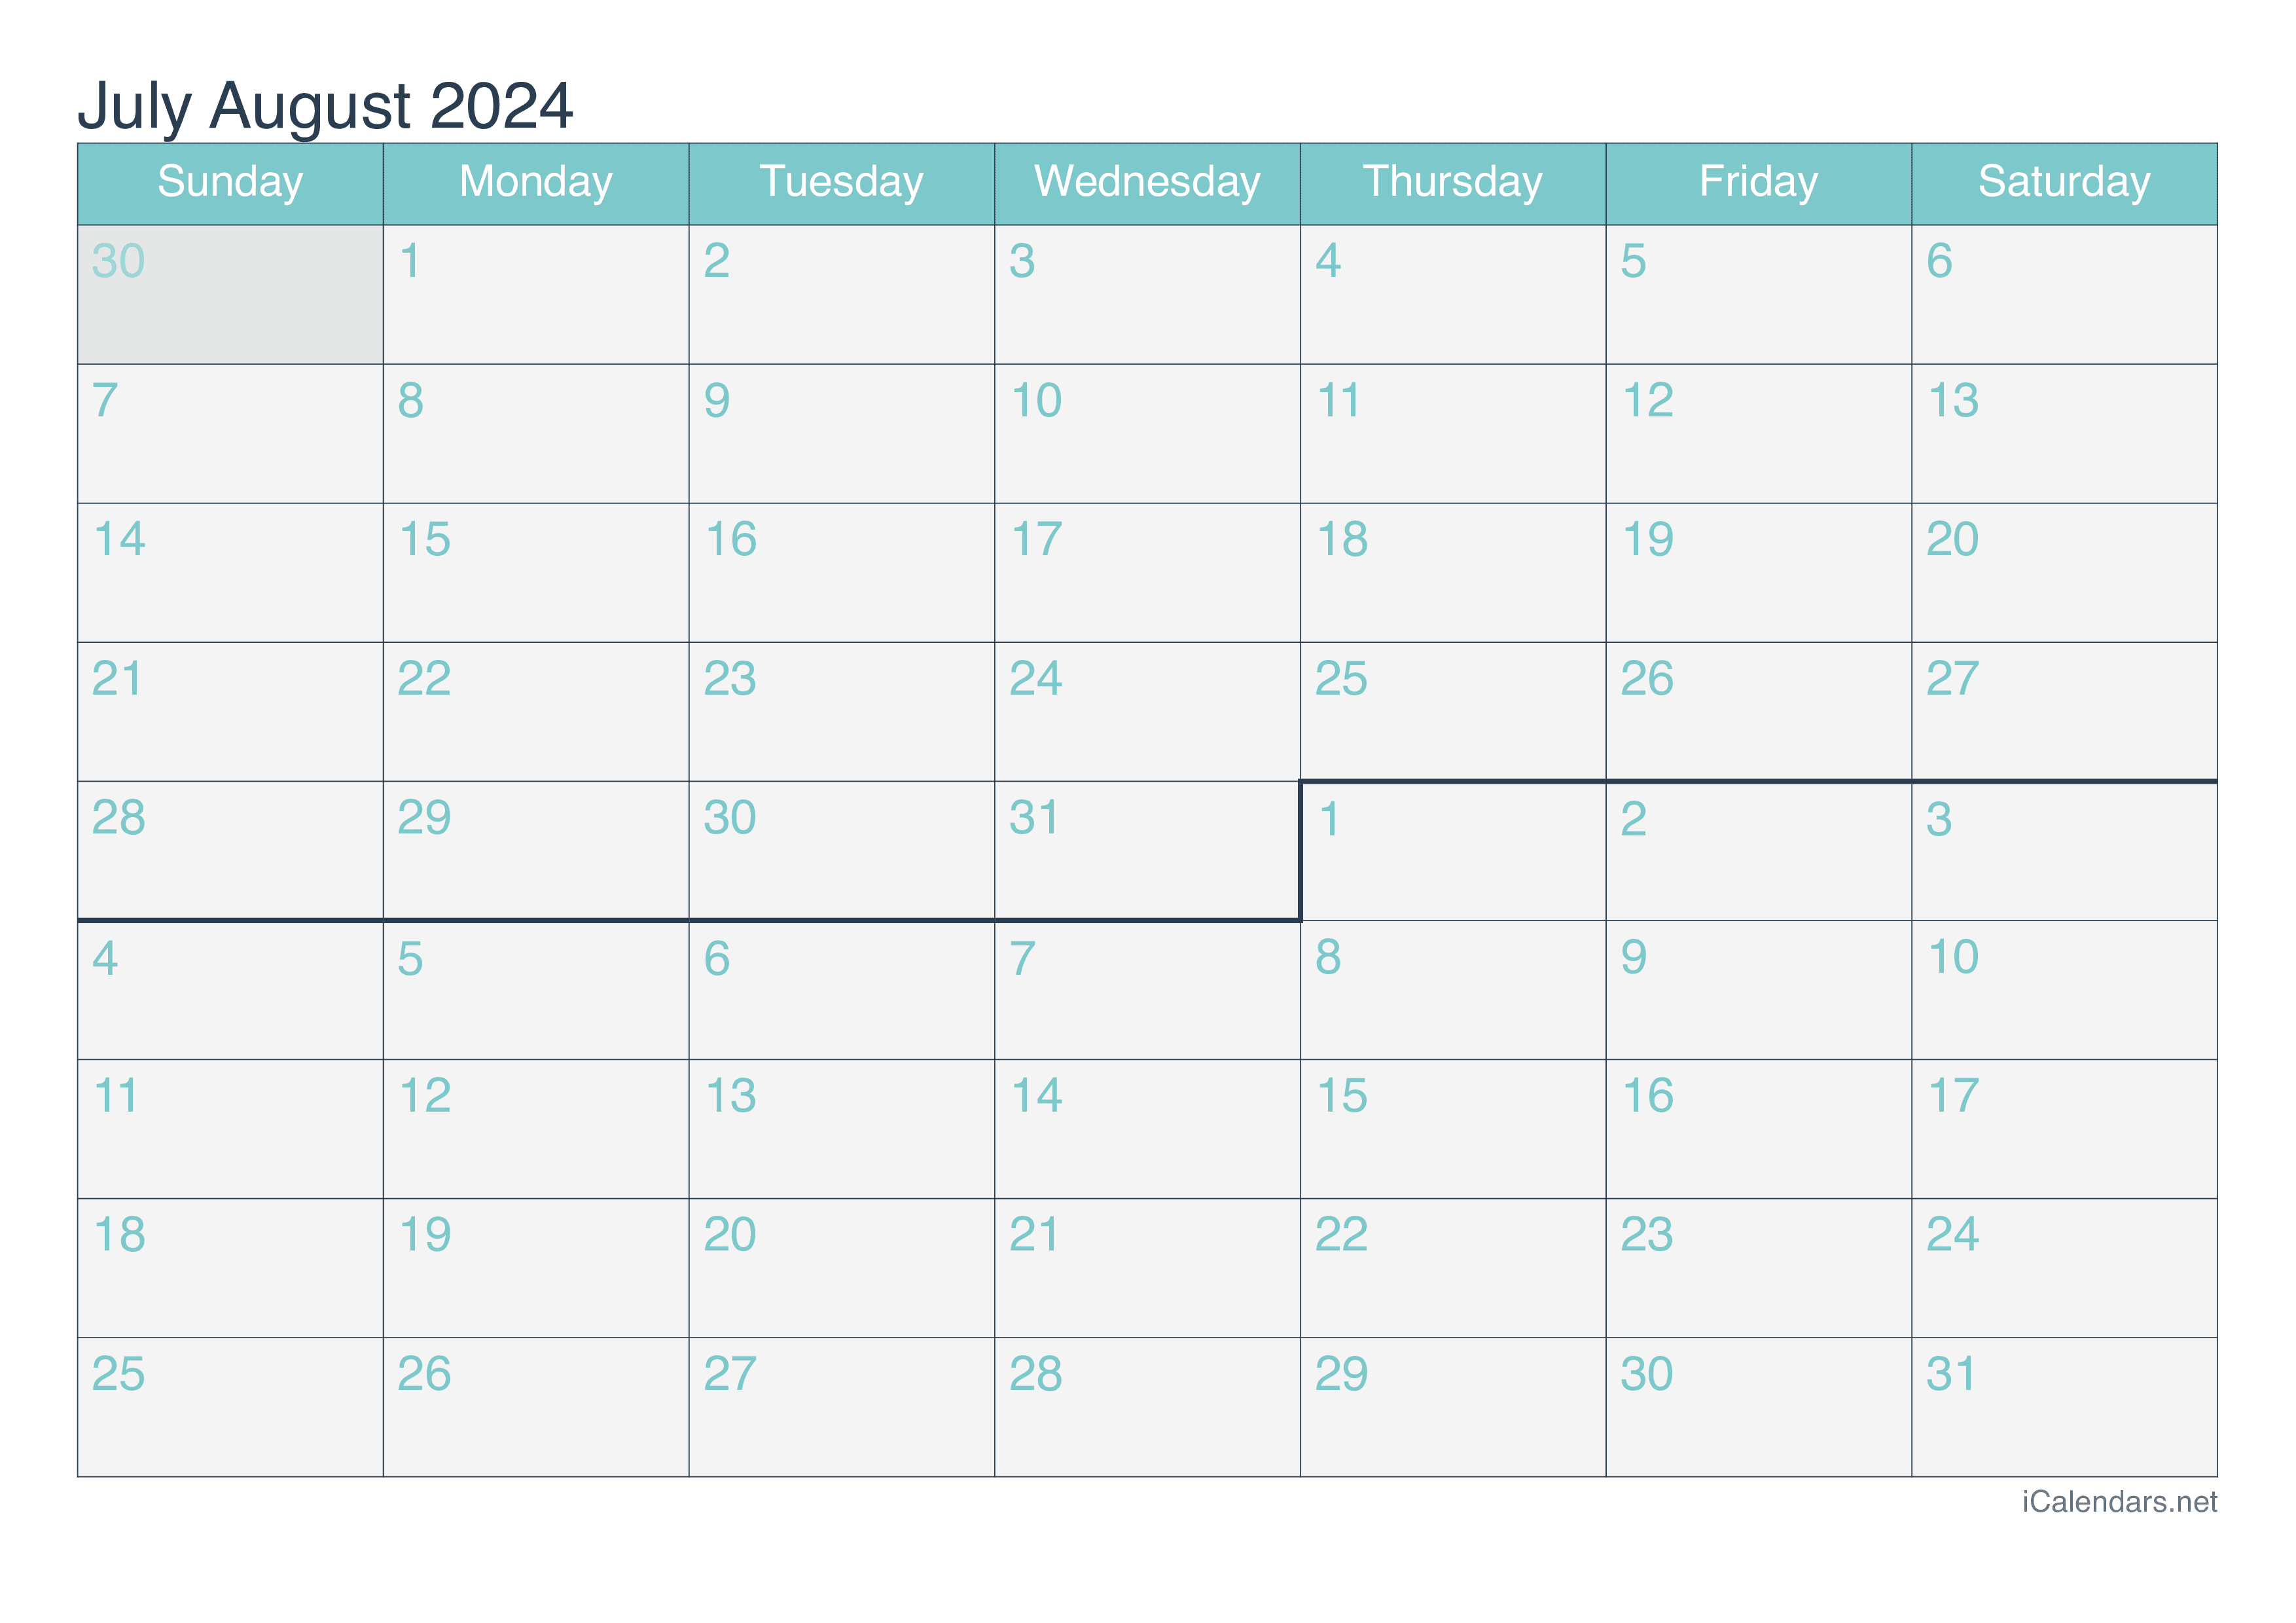 July And August 2024 Printable Calendar regarding Calendar For July And August 2024